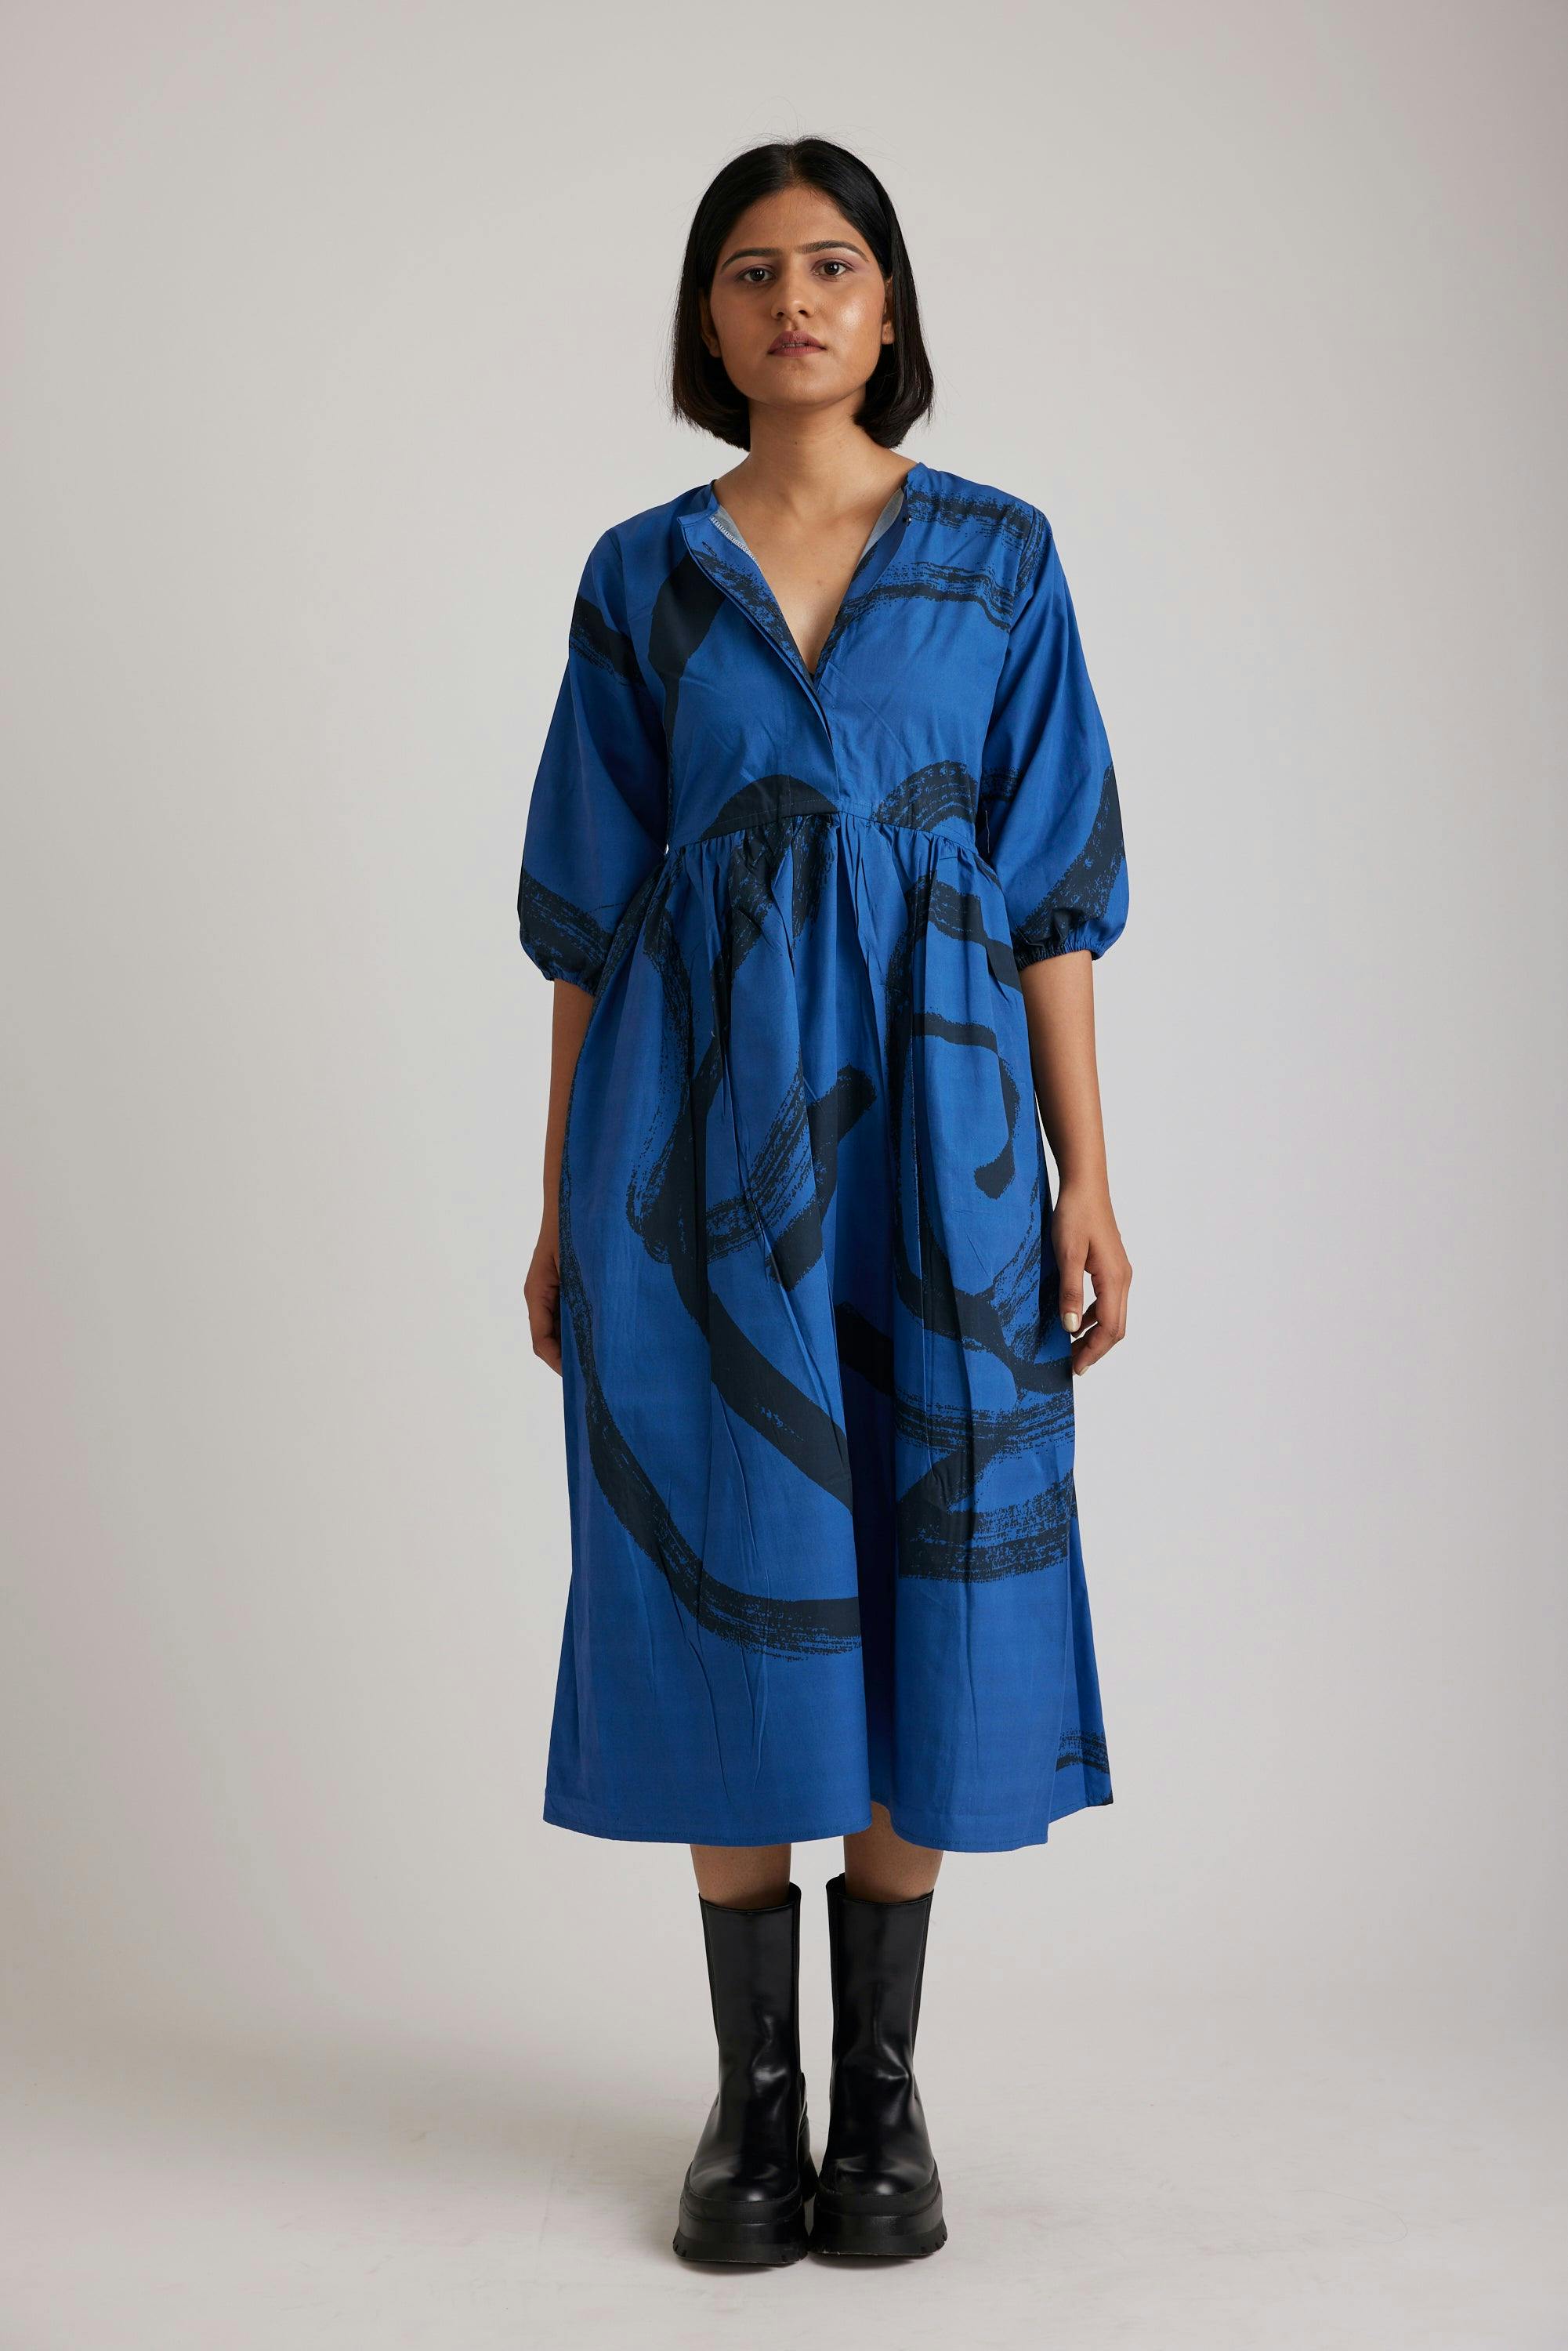 Black the blue ( midi dress ), a product by Radharaman